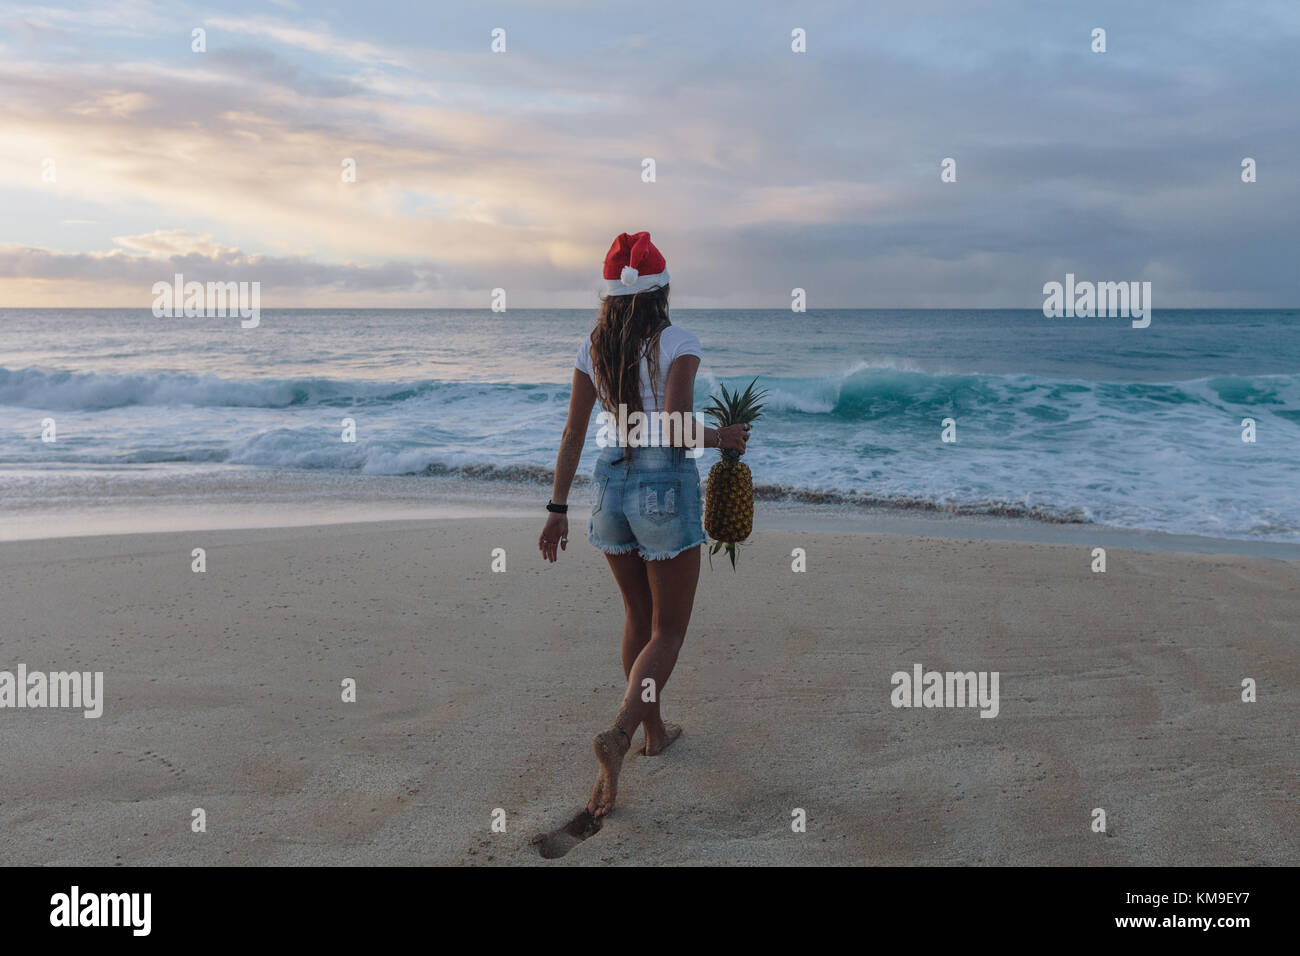 Woman wearing a Christmas Santa hat walking on beach carrying a pineapple, Haleiwa, Hawaii, United States Stock Photo